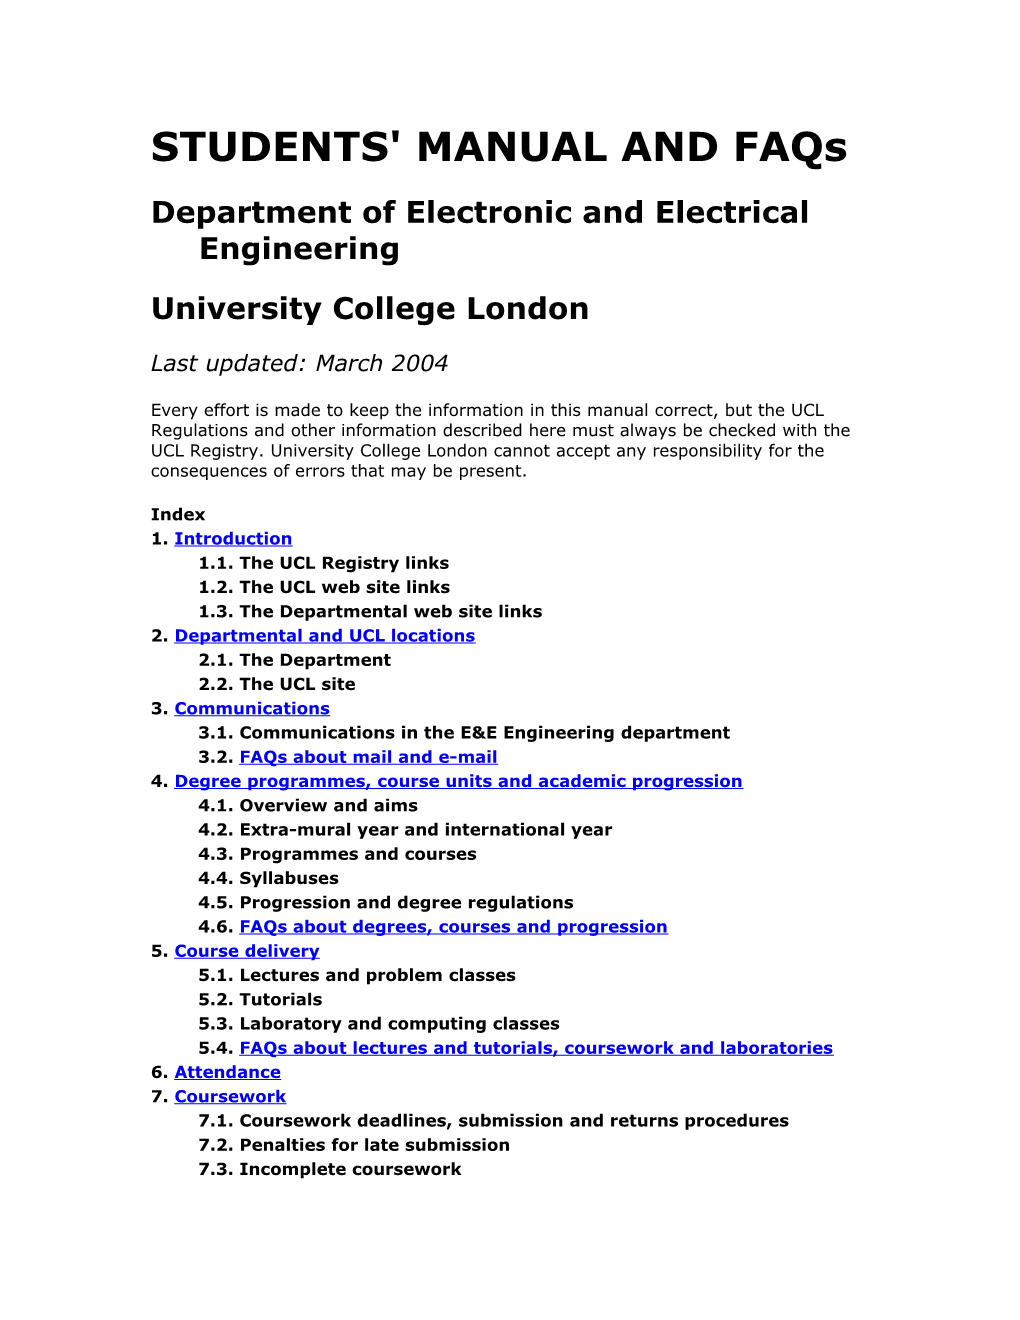 E&E Engineering Undergraduate Students' Manual